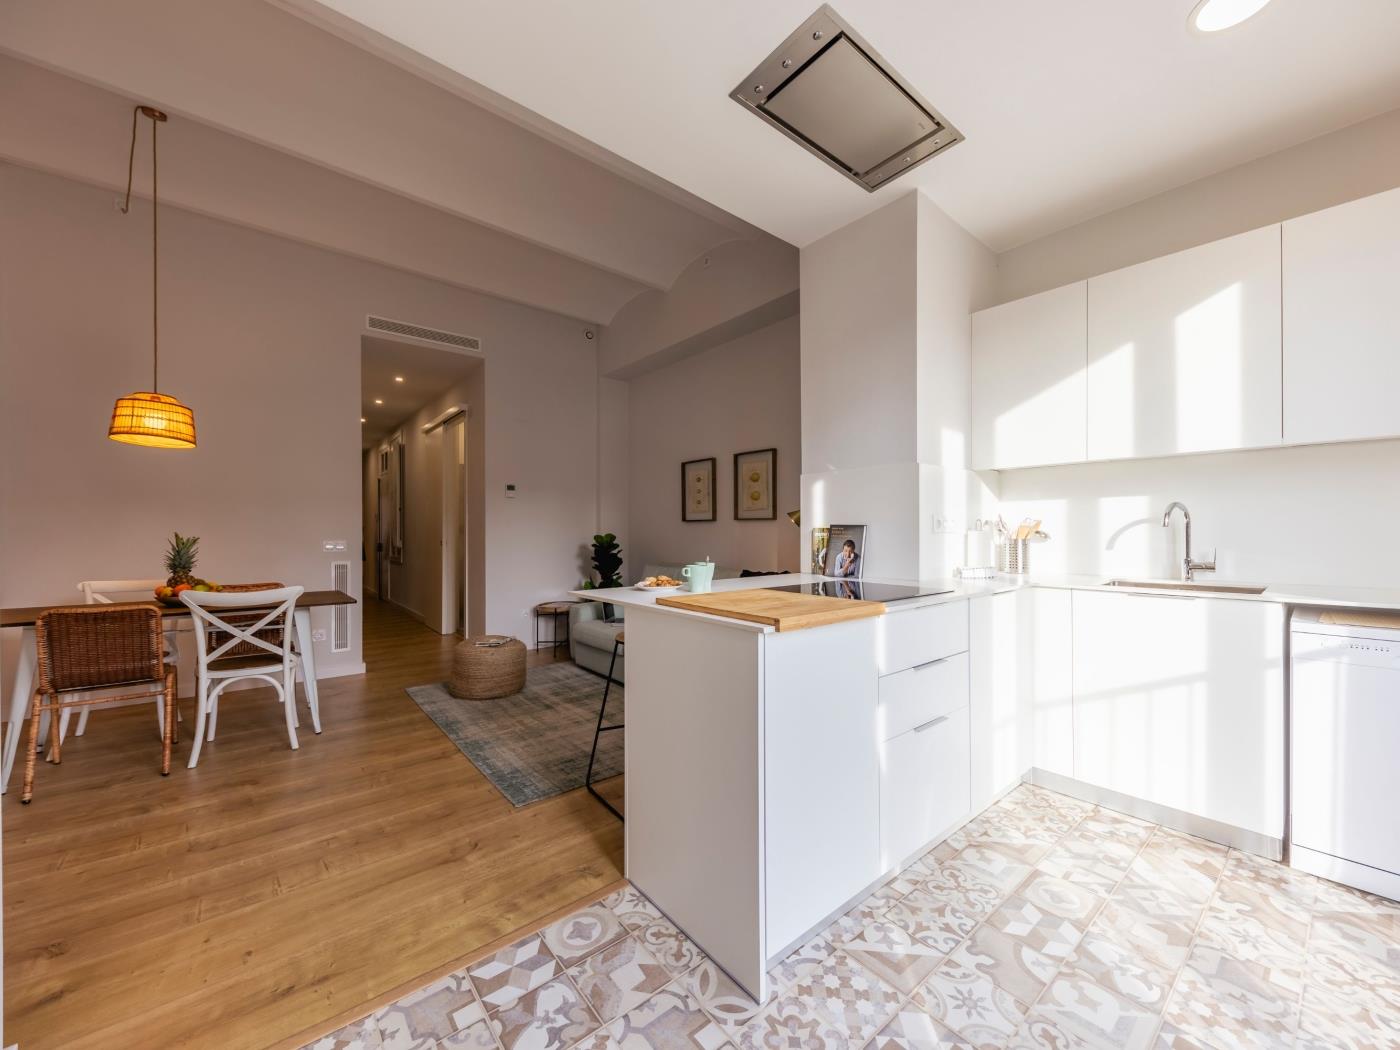 Bravissimo Riu Onyar, modern i amb 3 habitacions a Girona